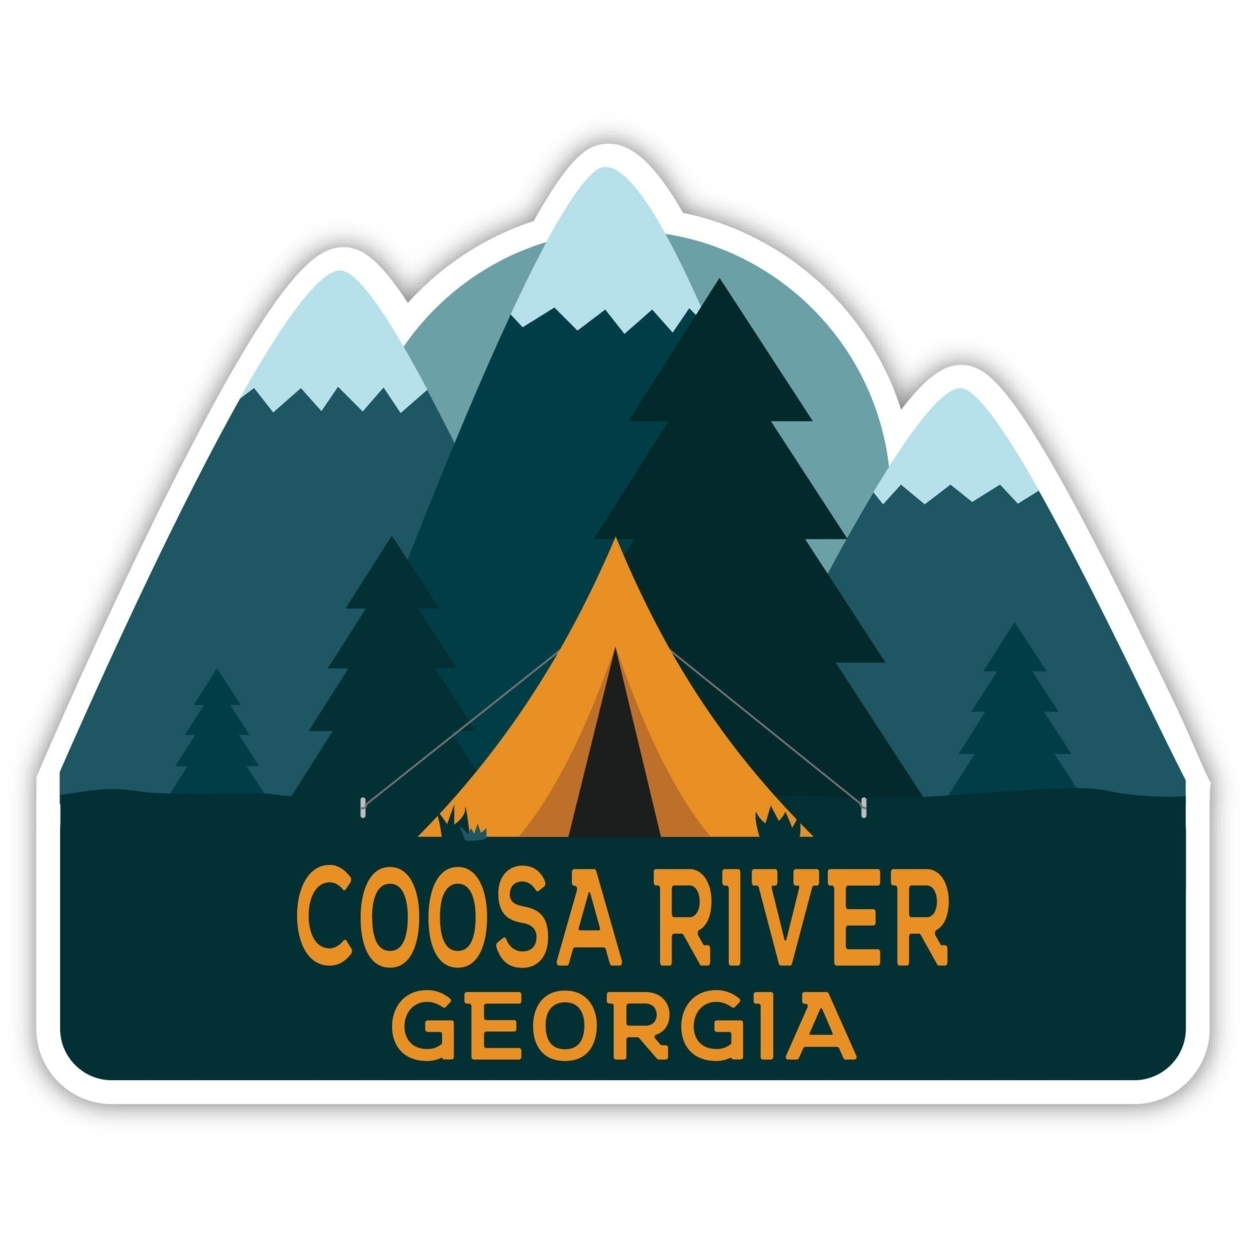 Coosa River Georgia Souvenir Decorative Stickers (Choose Theme And Size) - Single Unit, 4-Inch, Tent